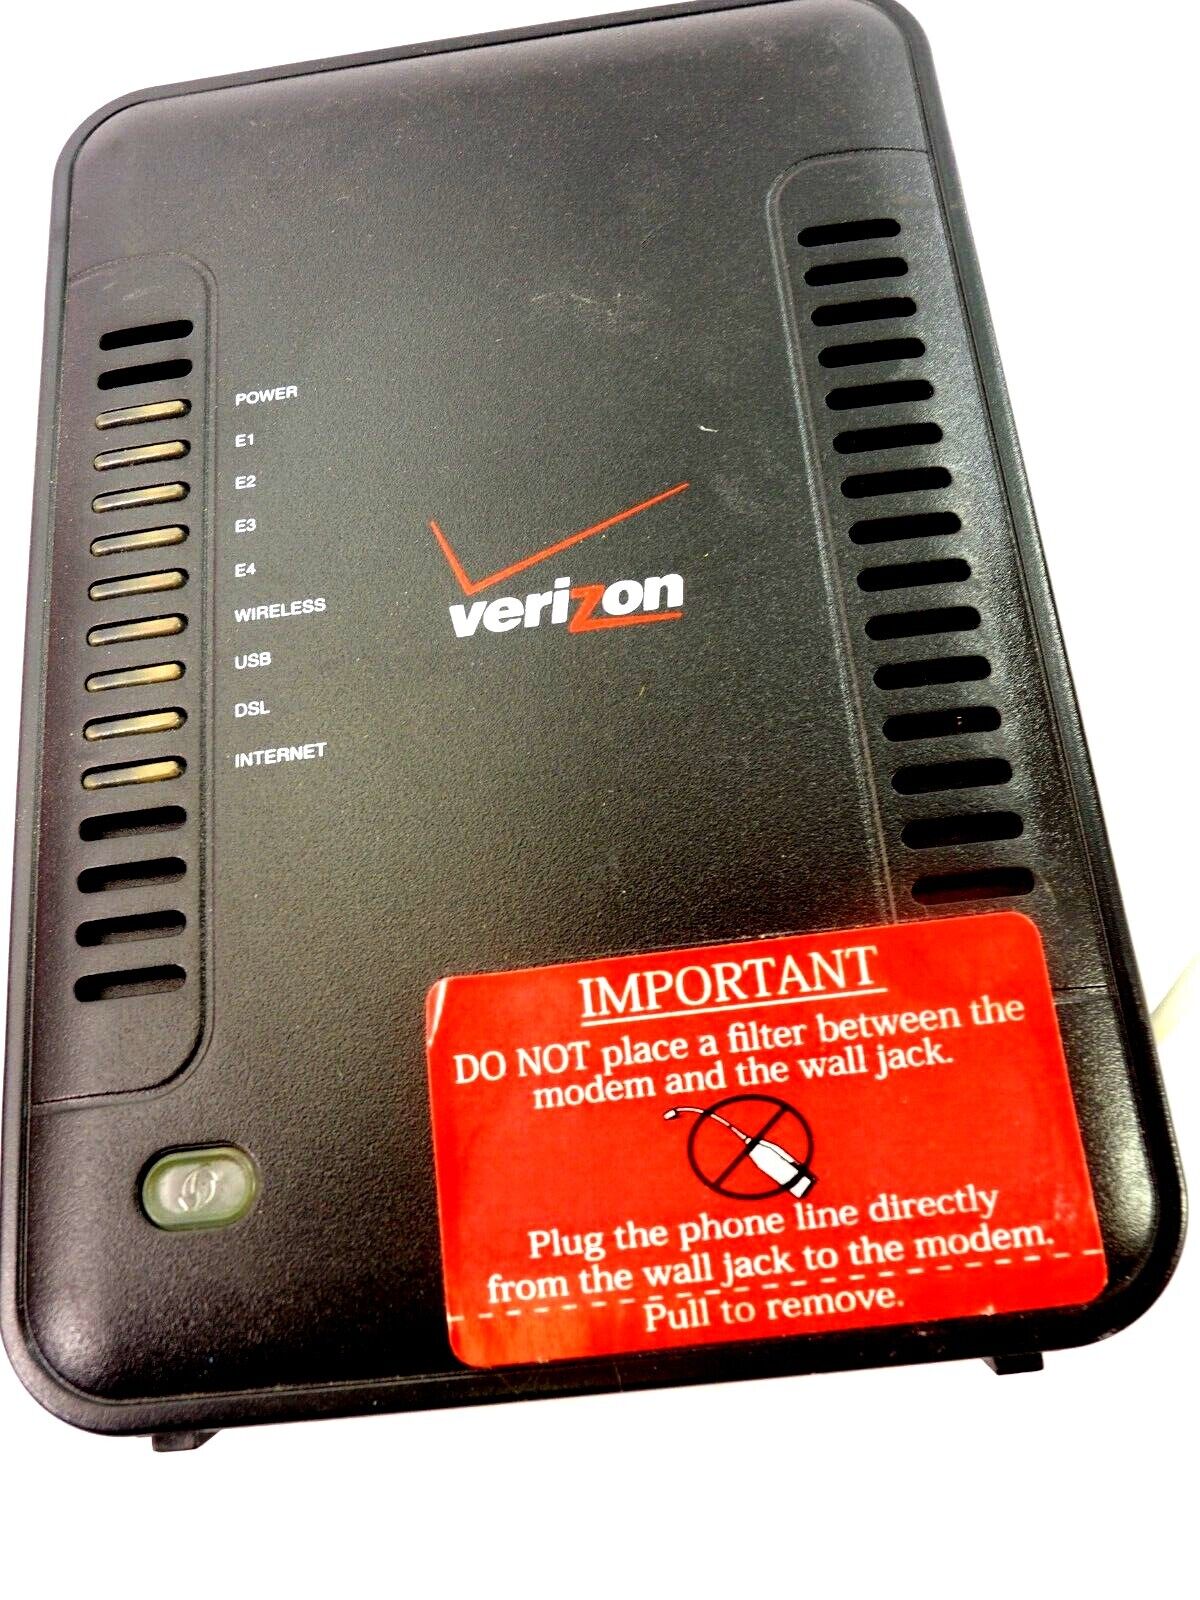 Verizon Westell Wireless Gateway Modem /router Model A90-750015-07